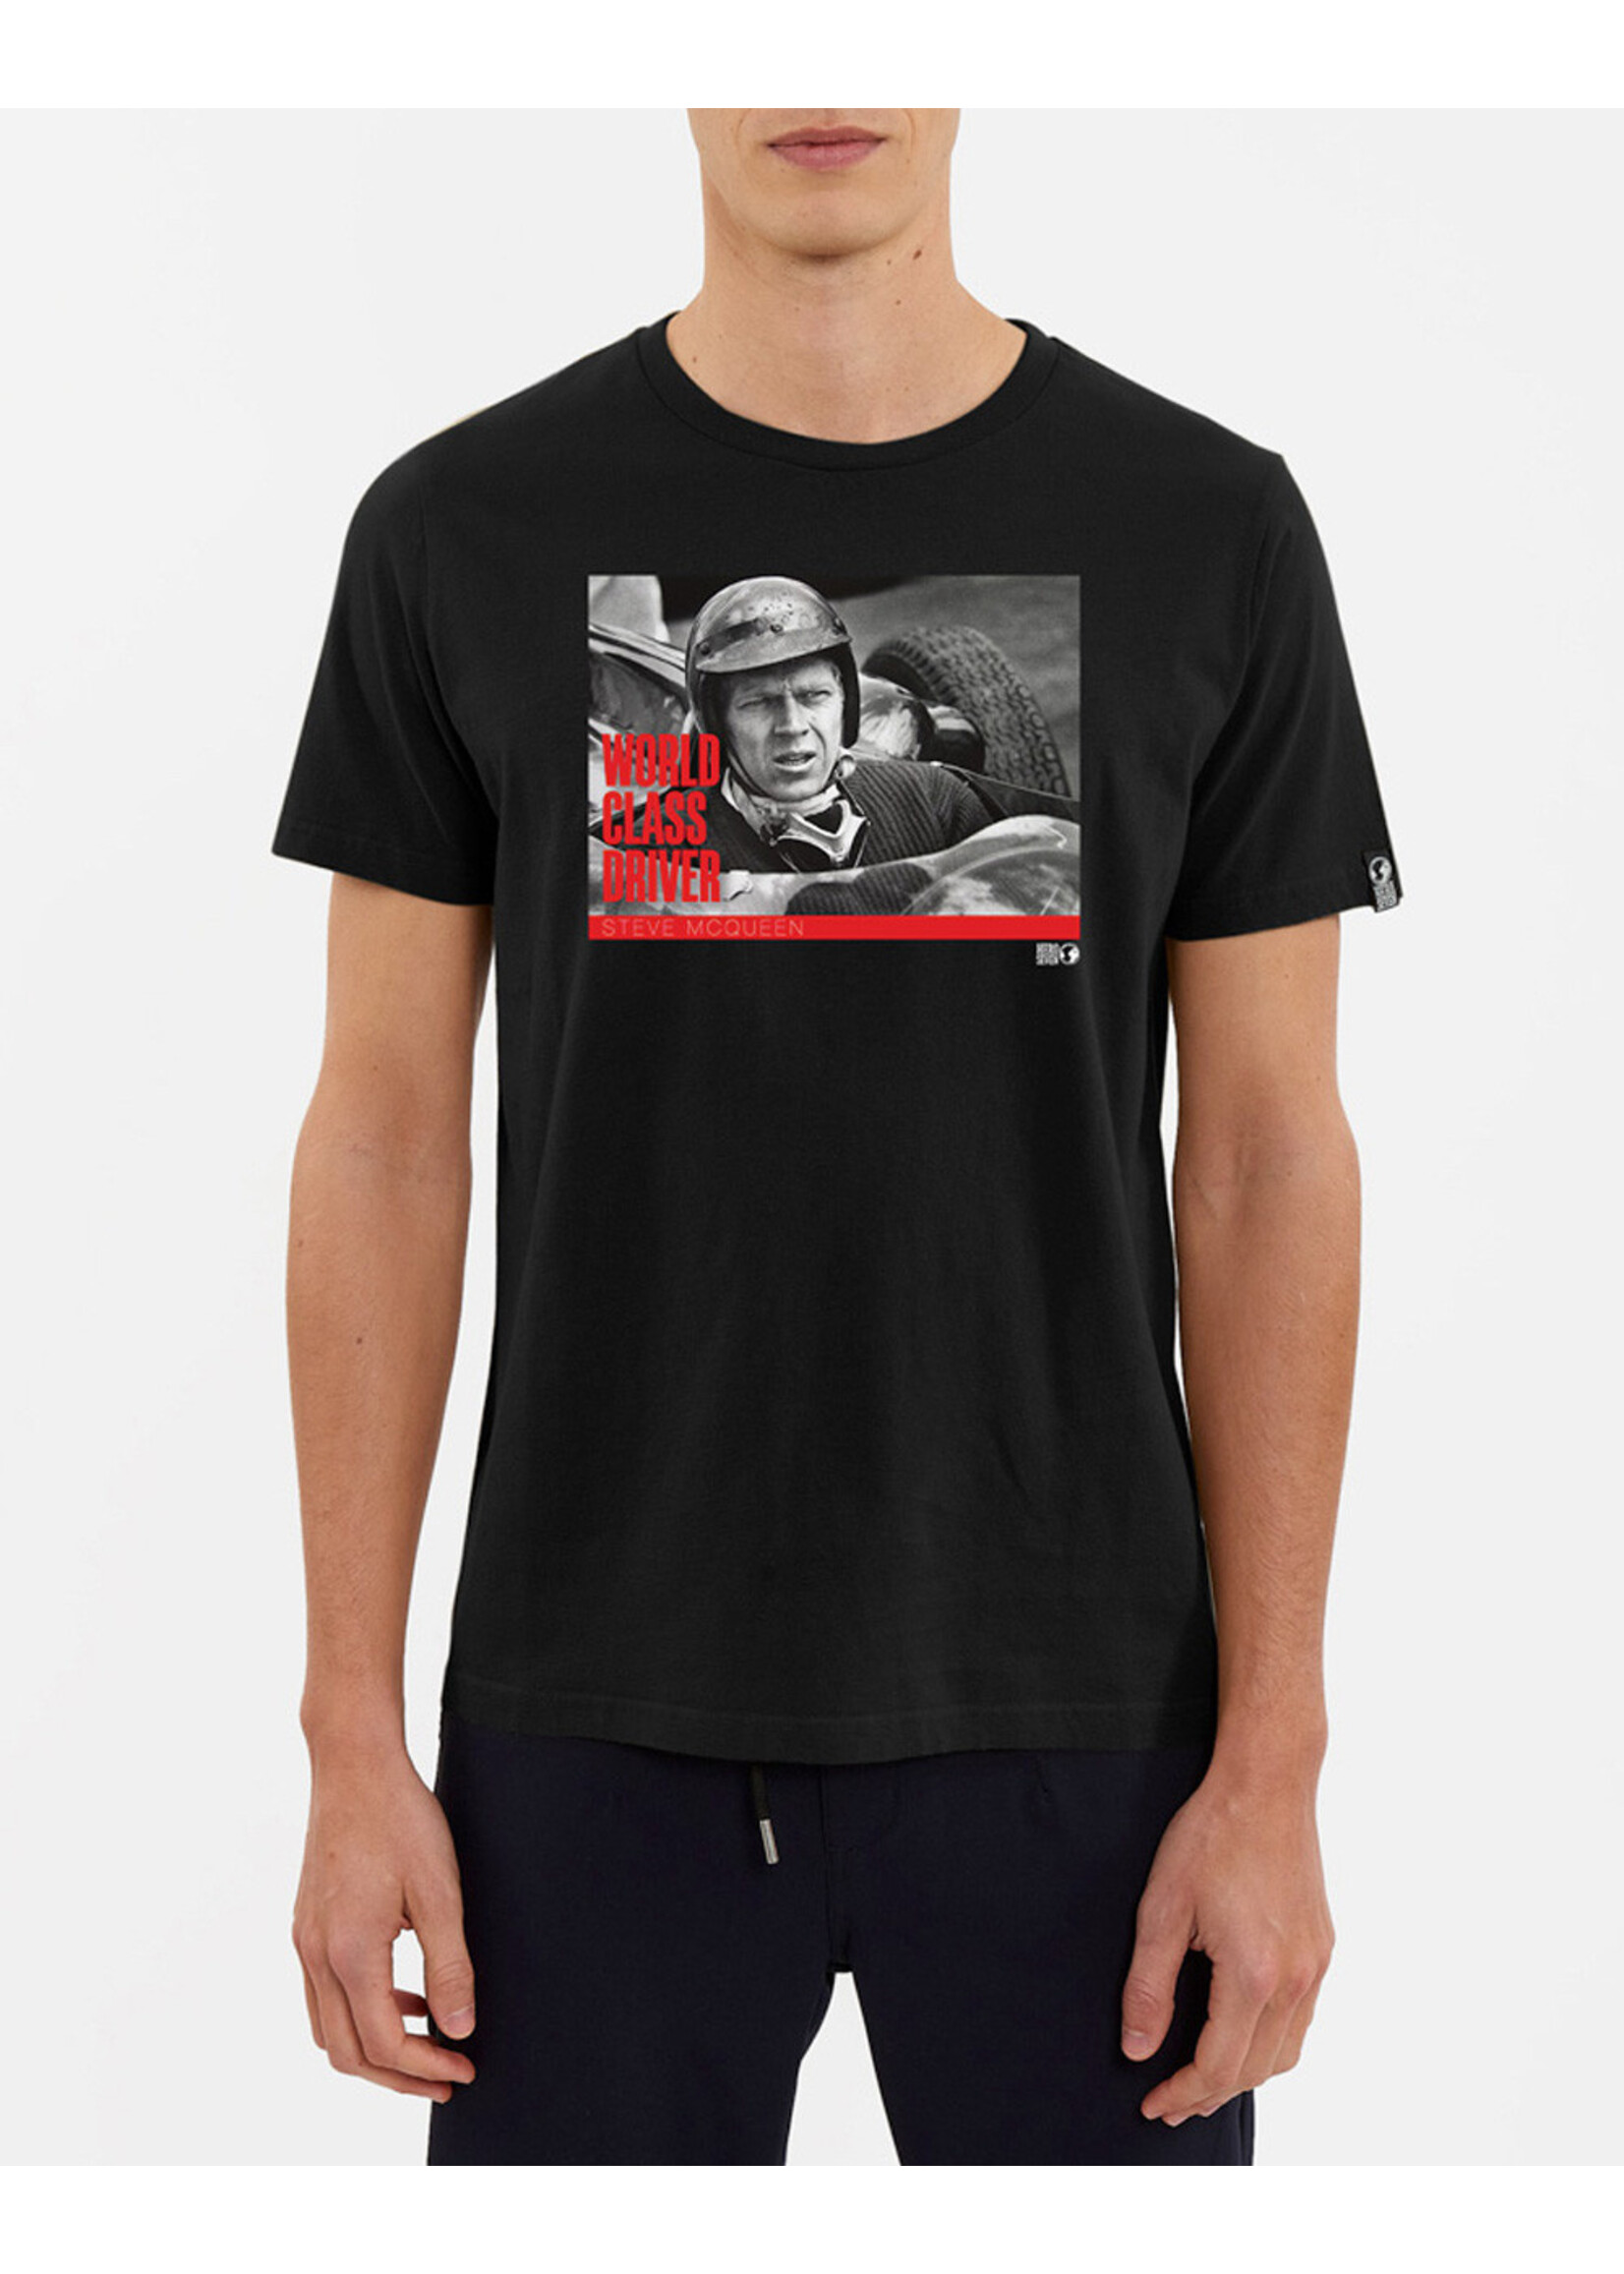 HEROSEVEN HEROSEVEN - American Driver T-shirt